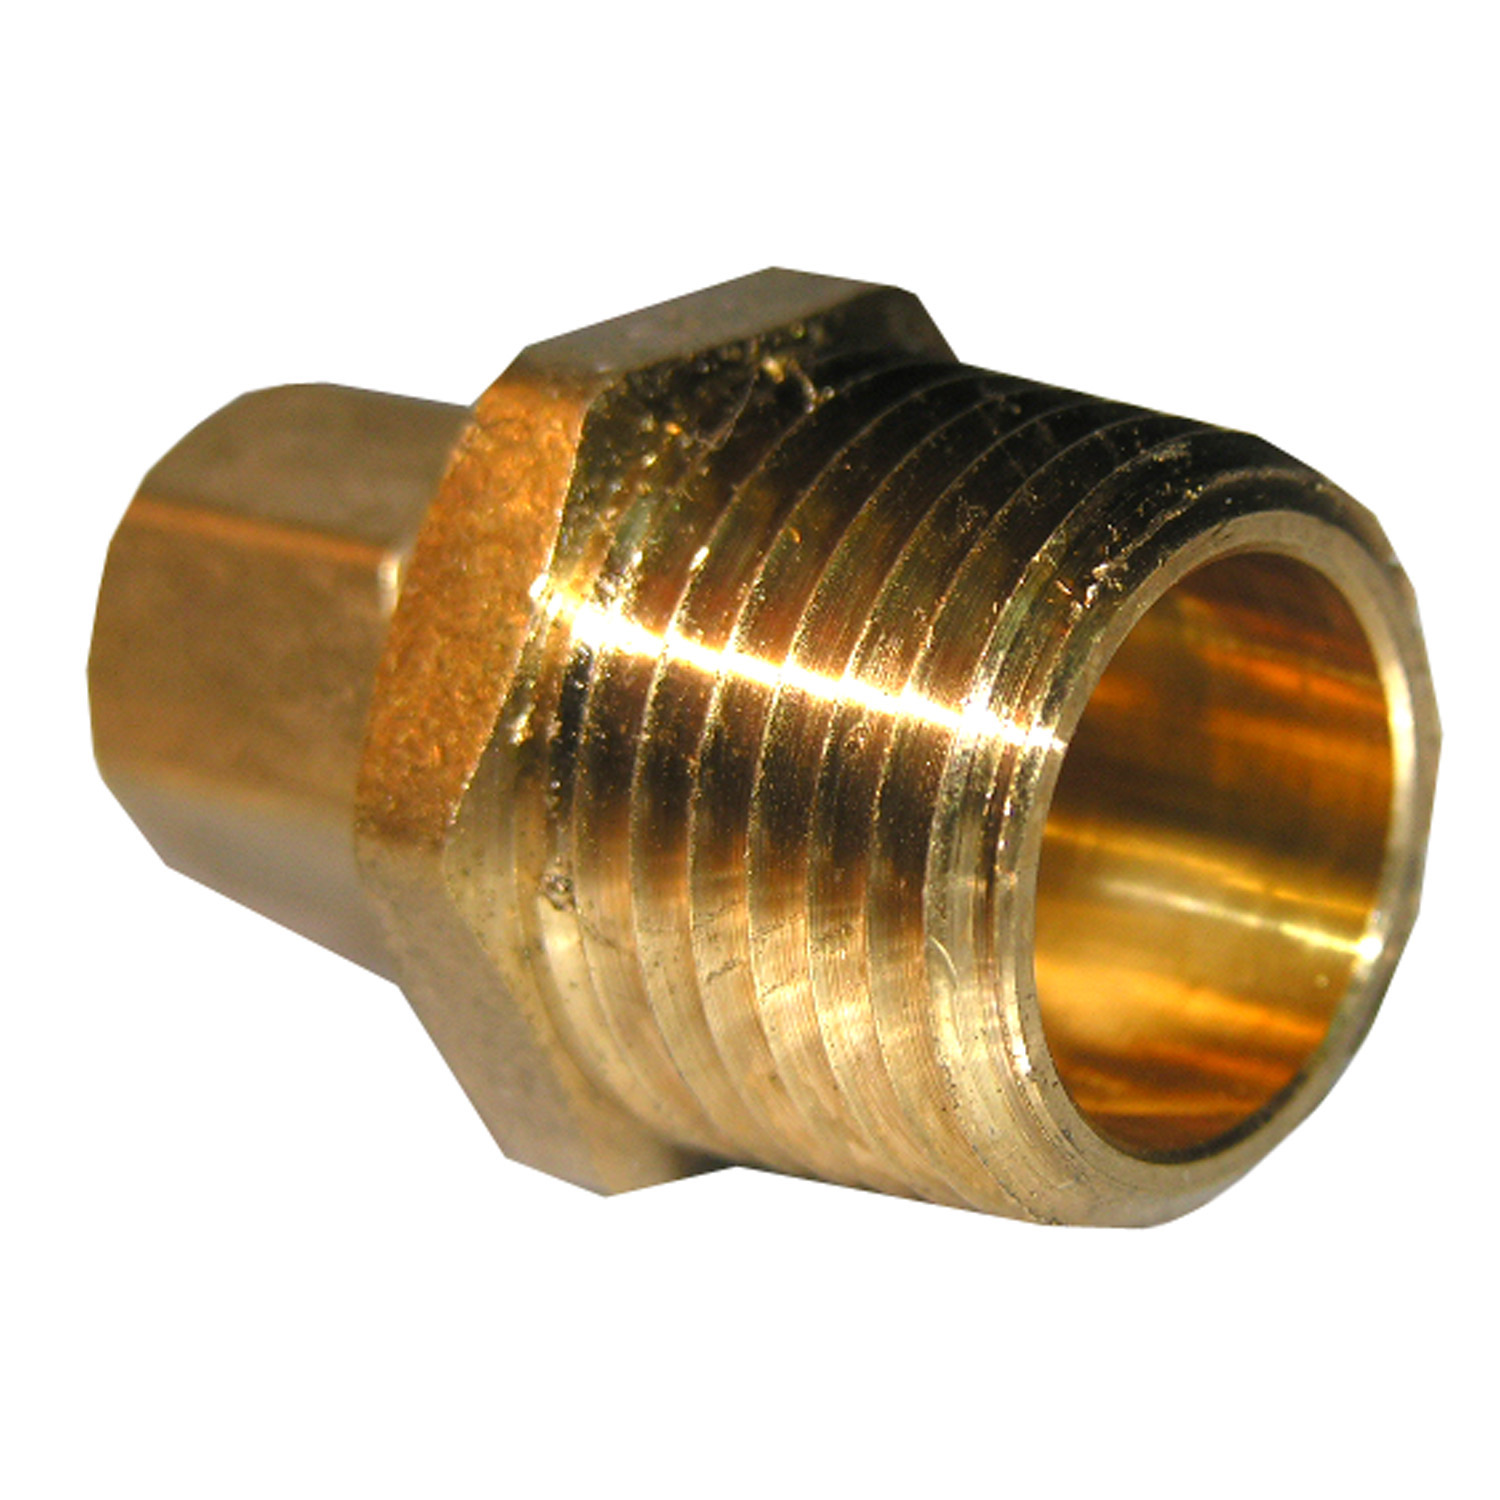 17-6817 Pipe Adapter, 1/4 x 1/2 in, Compression x MPT, Brass, 150 psi Pressure